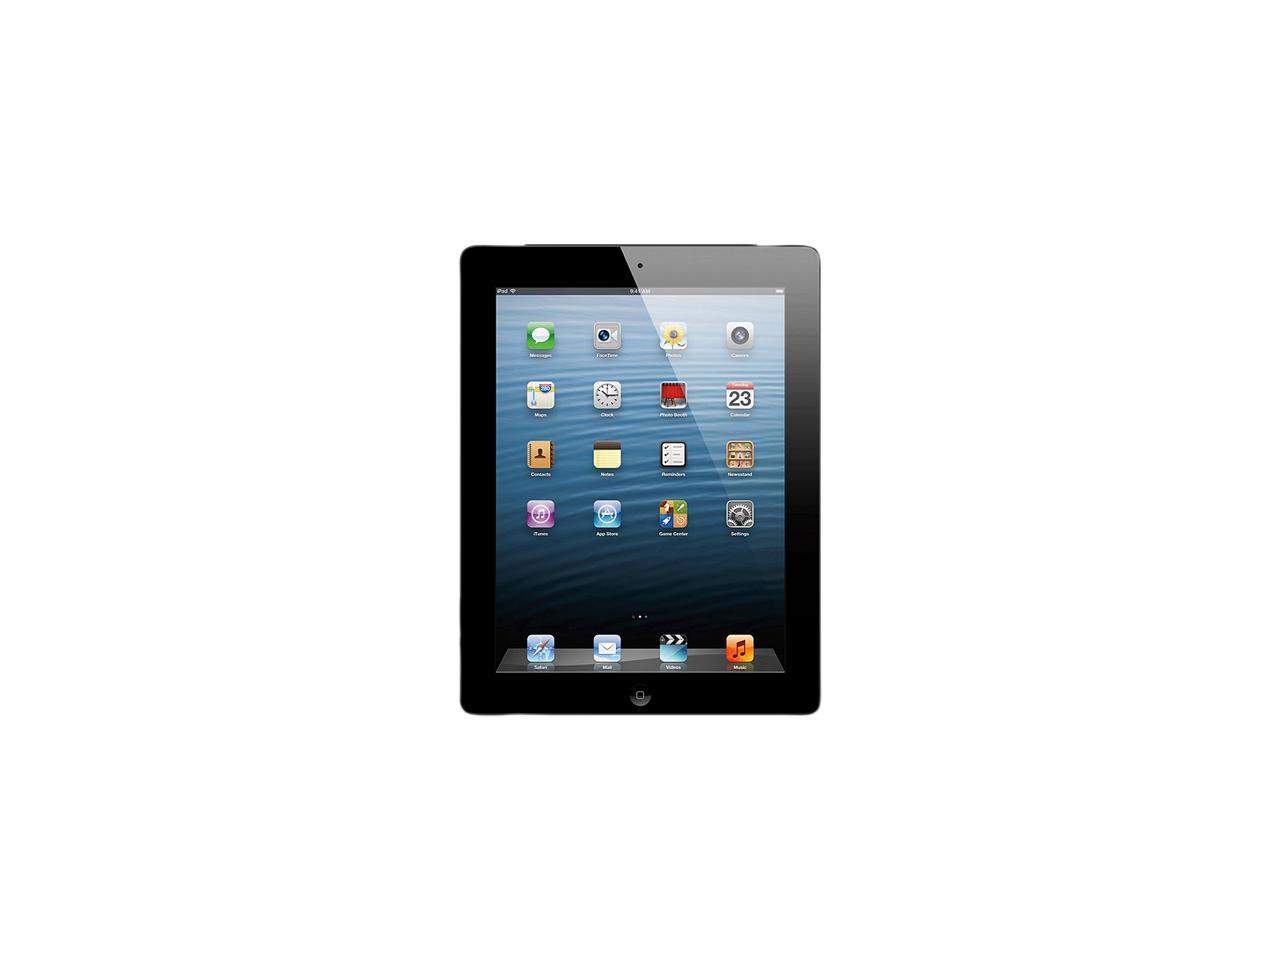 Apple iPad with Retina Display 4th Gen (16 GB) with Wi-Fi + AT&T 4G LTE - Black - Model #MD516LL/A